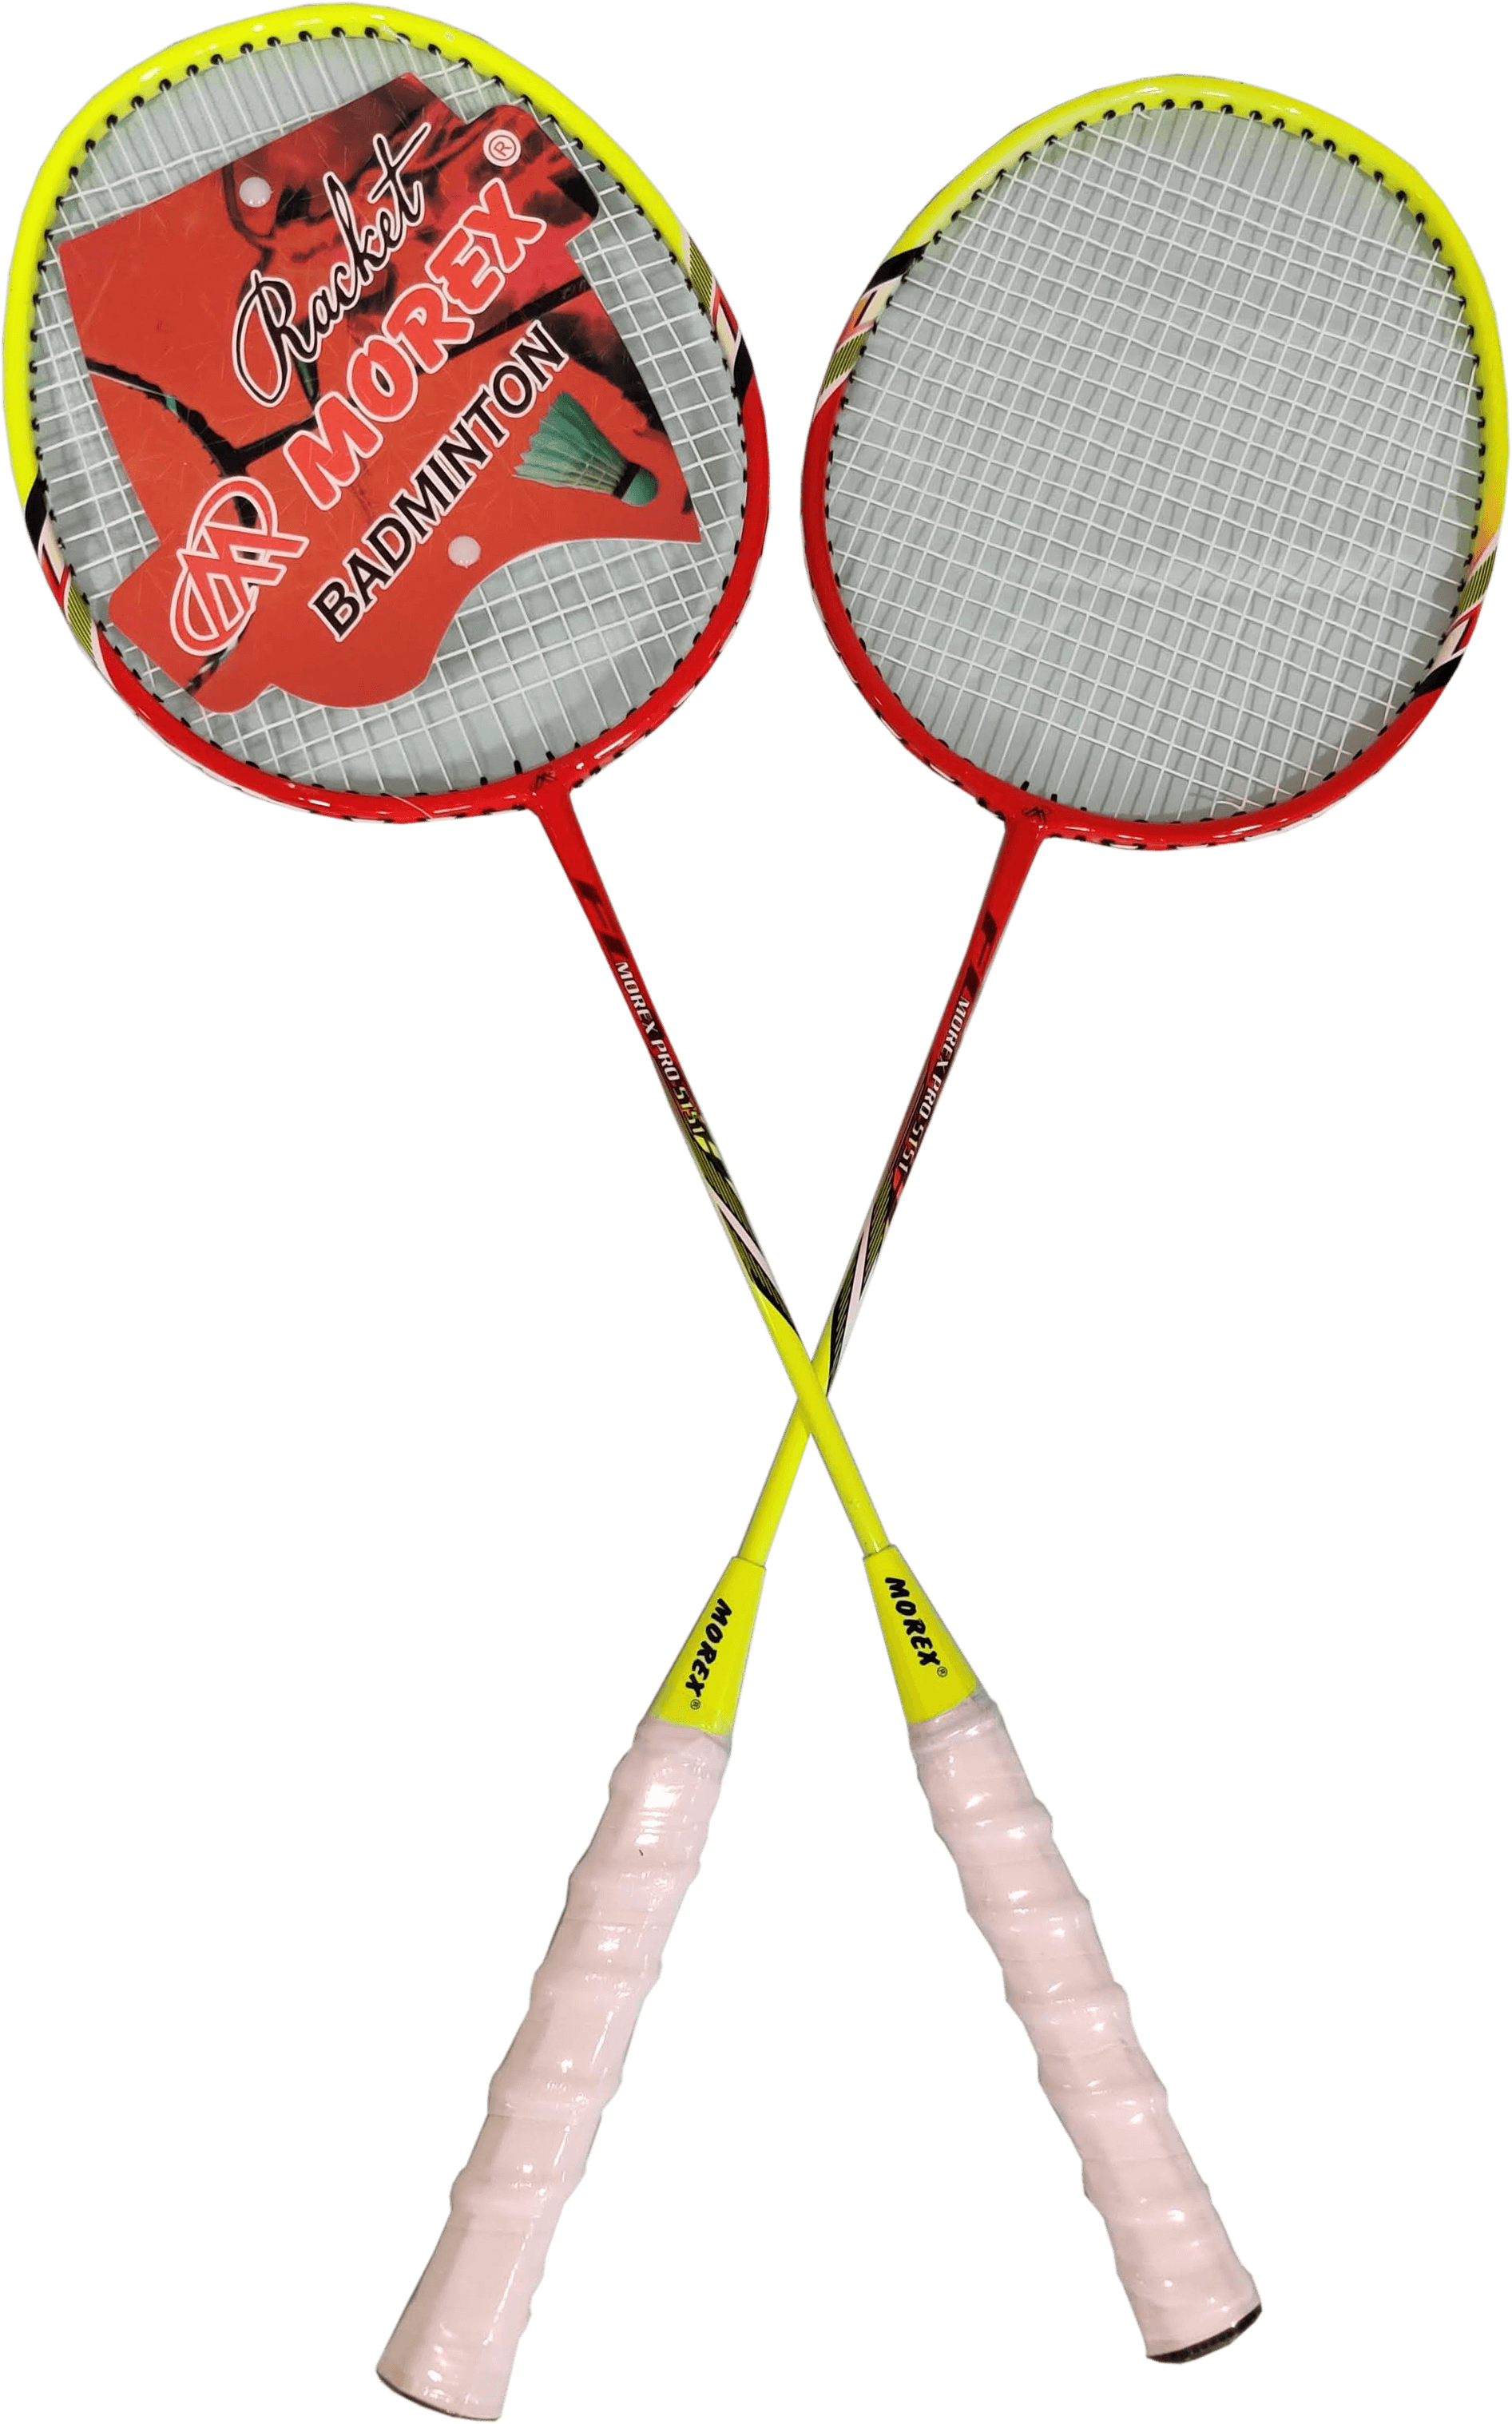 Morex 5151 Badminton Racket